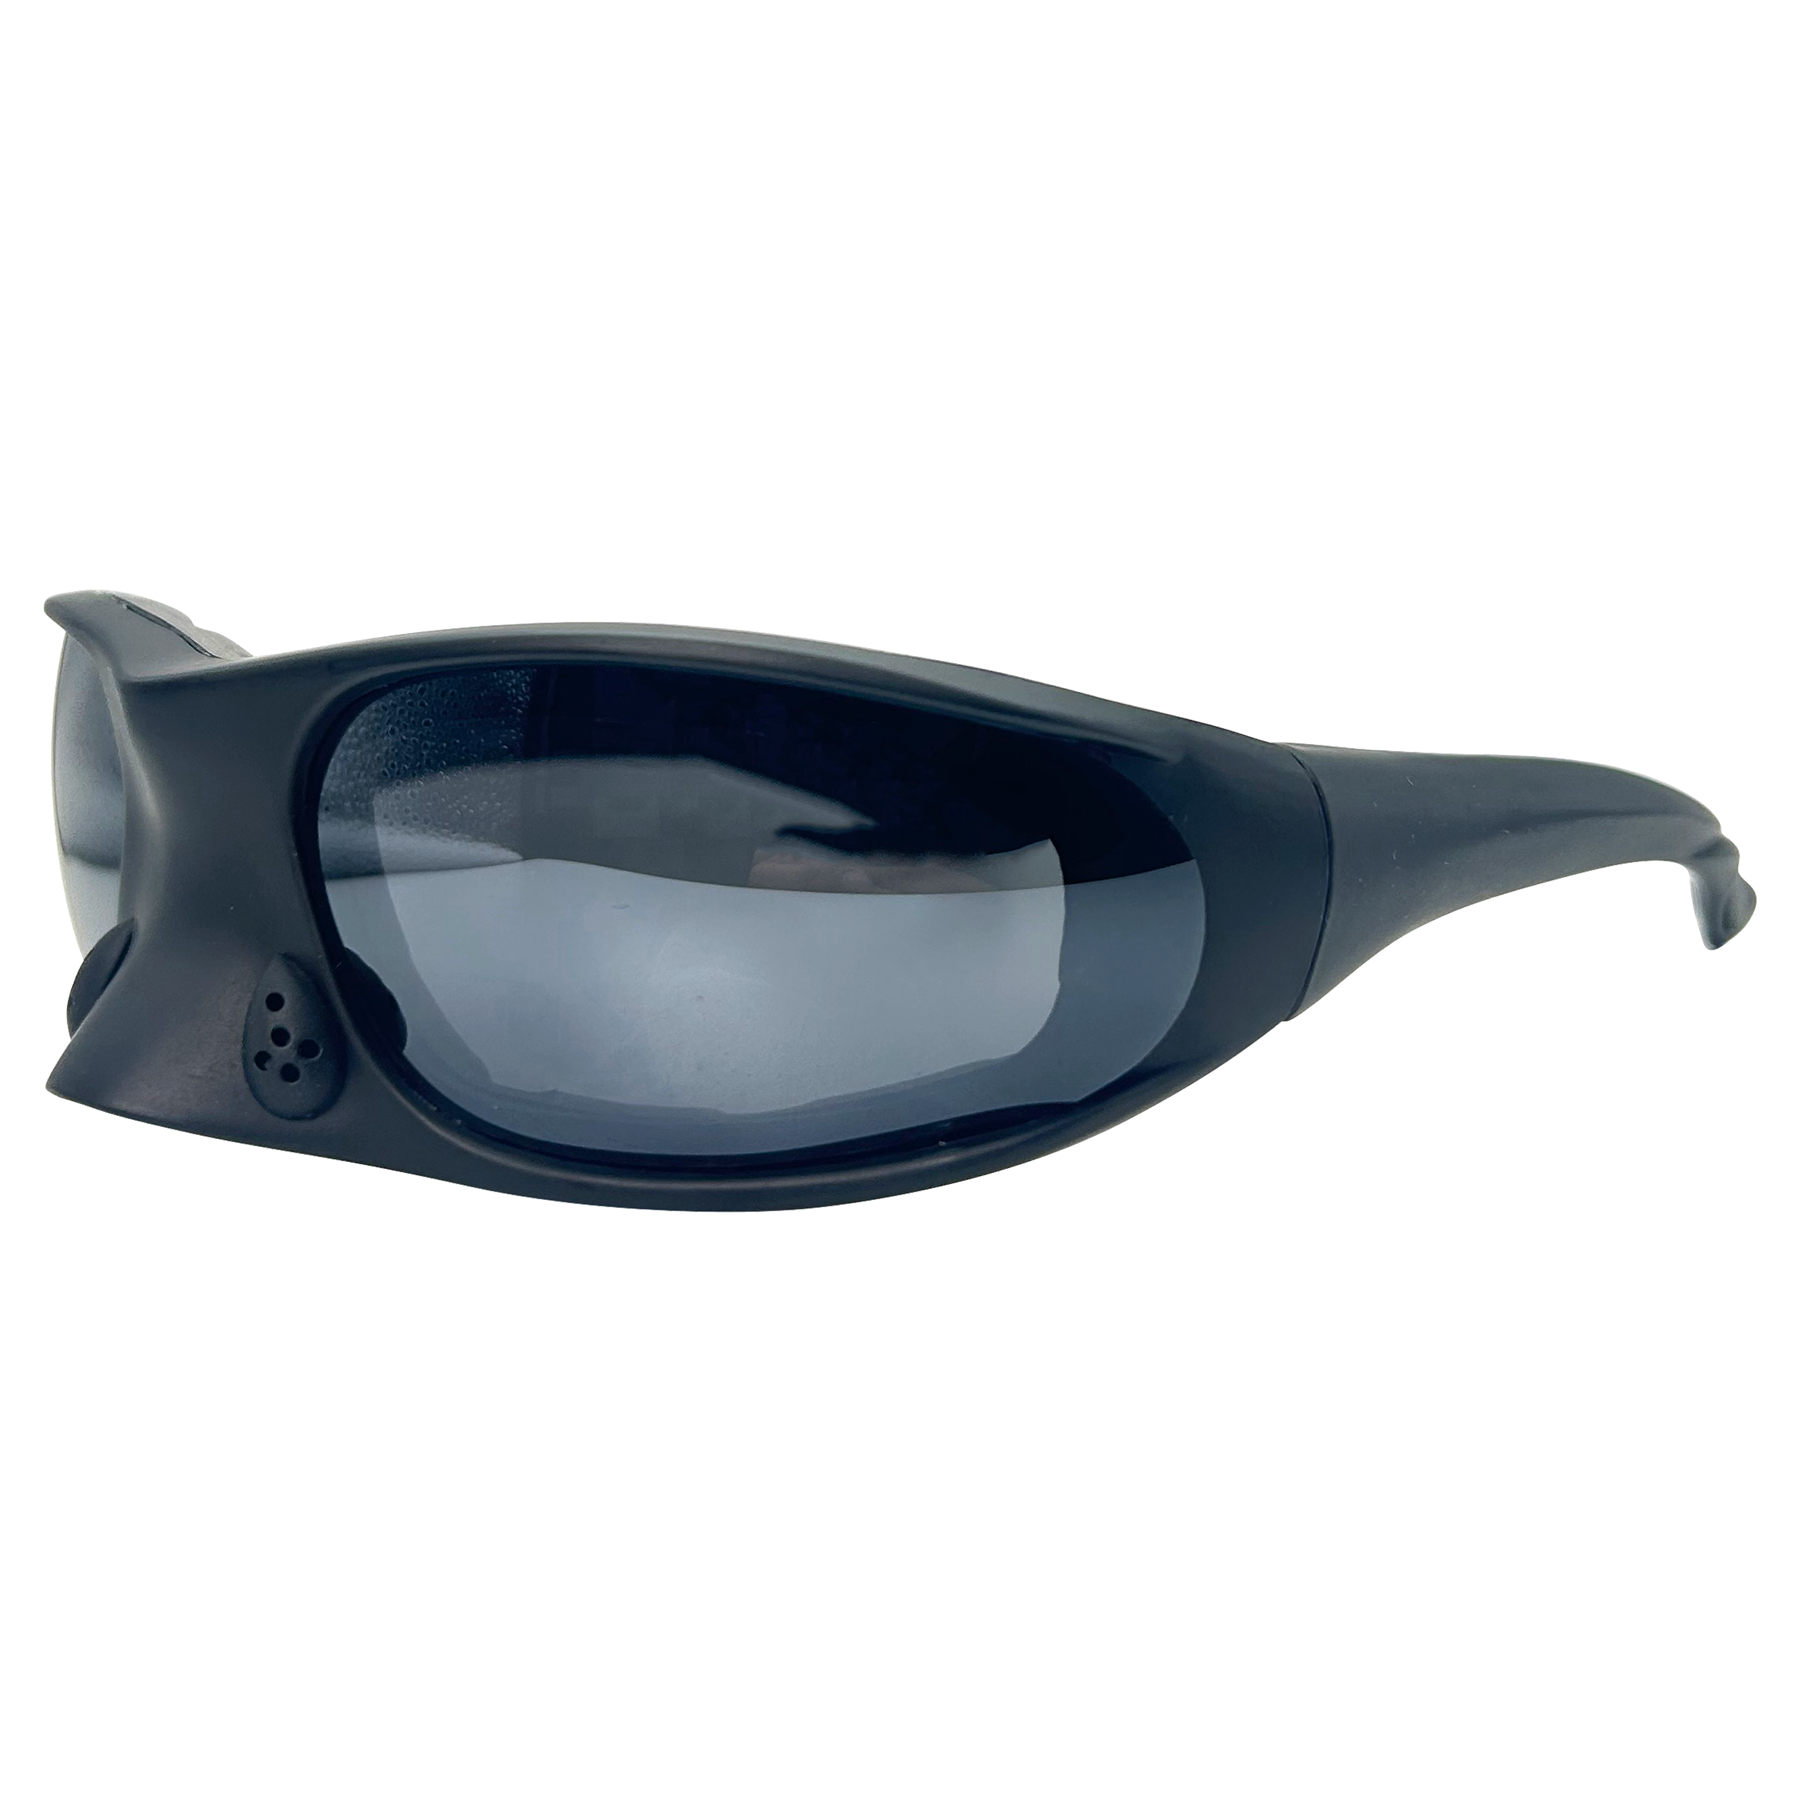 big black sunglasses, sporty wraparound style frame